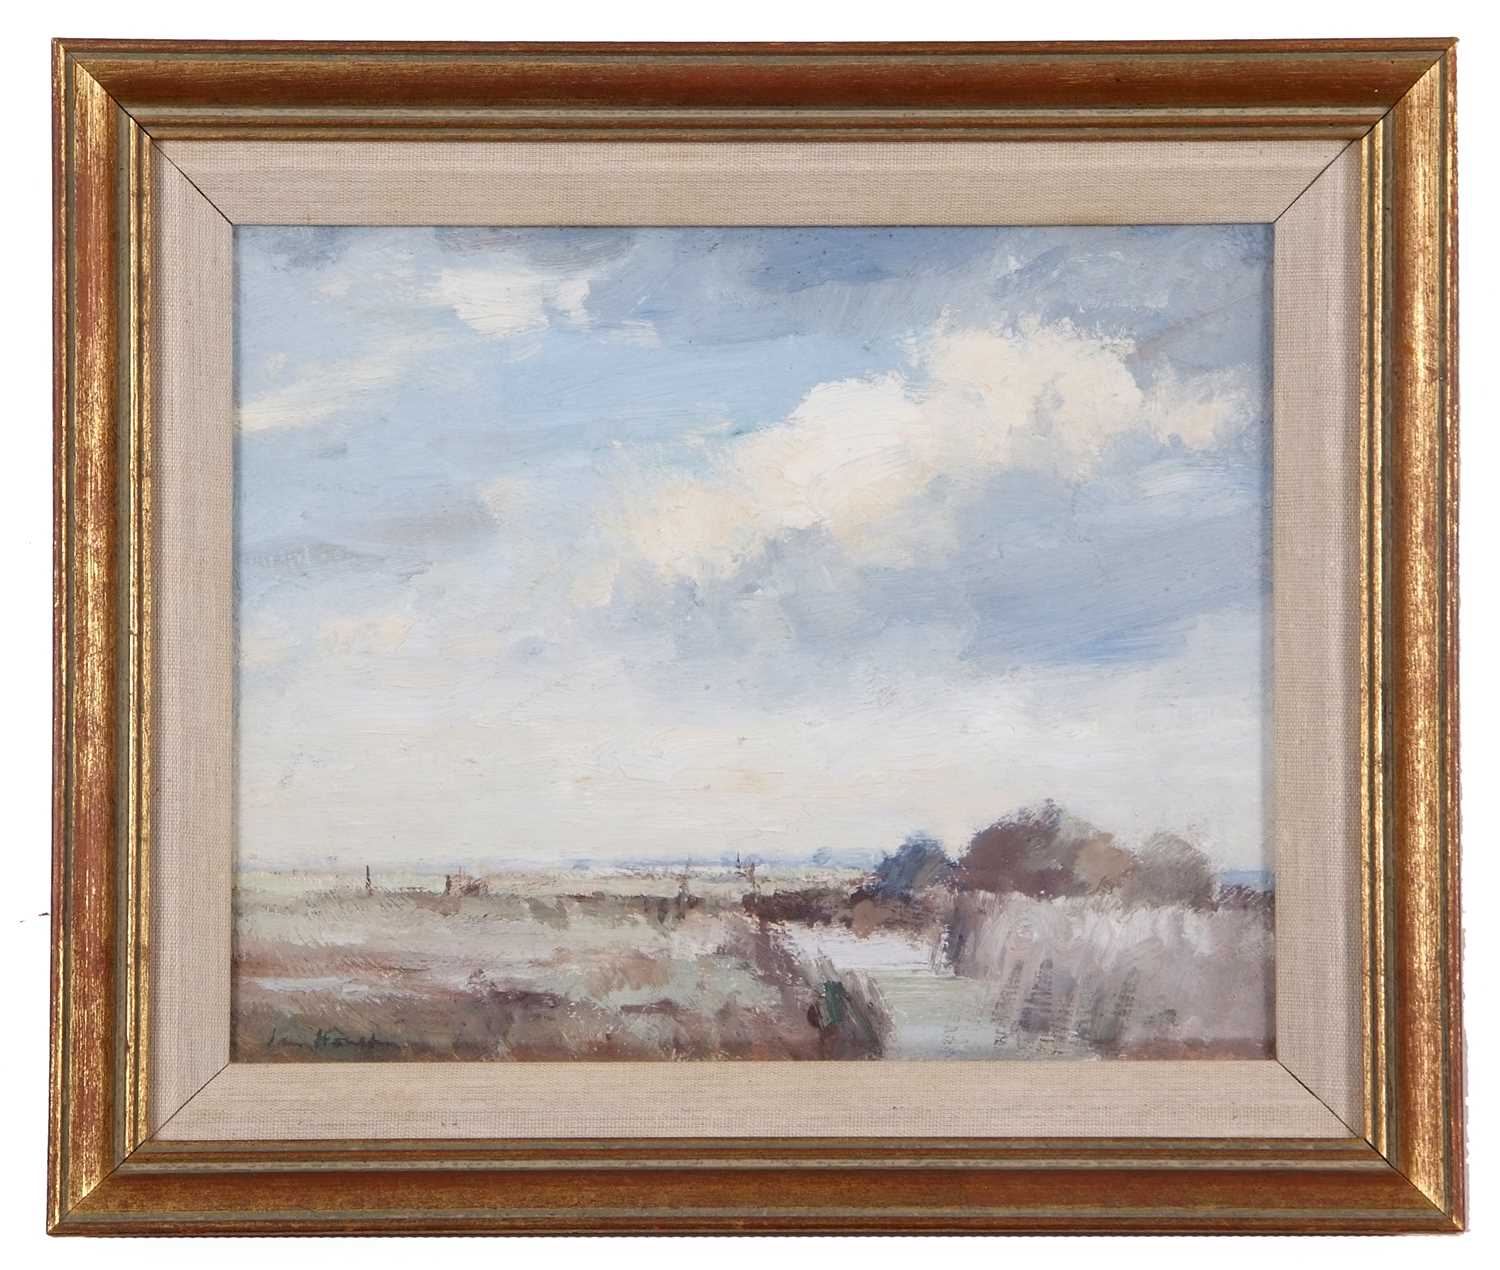 Ian Houston (British,1934-2021), "North Norfolk Marshland", oil on board, signed, 21x26cm, framed - Image 2 of 3